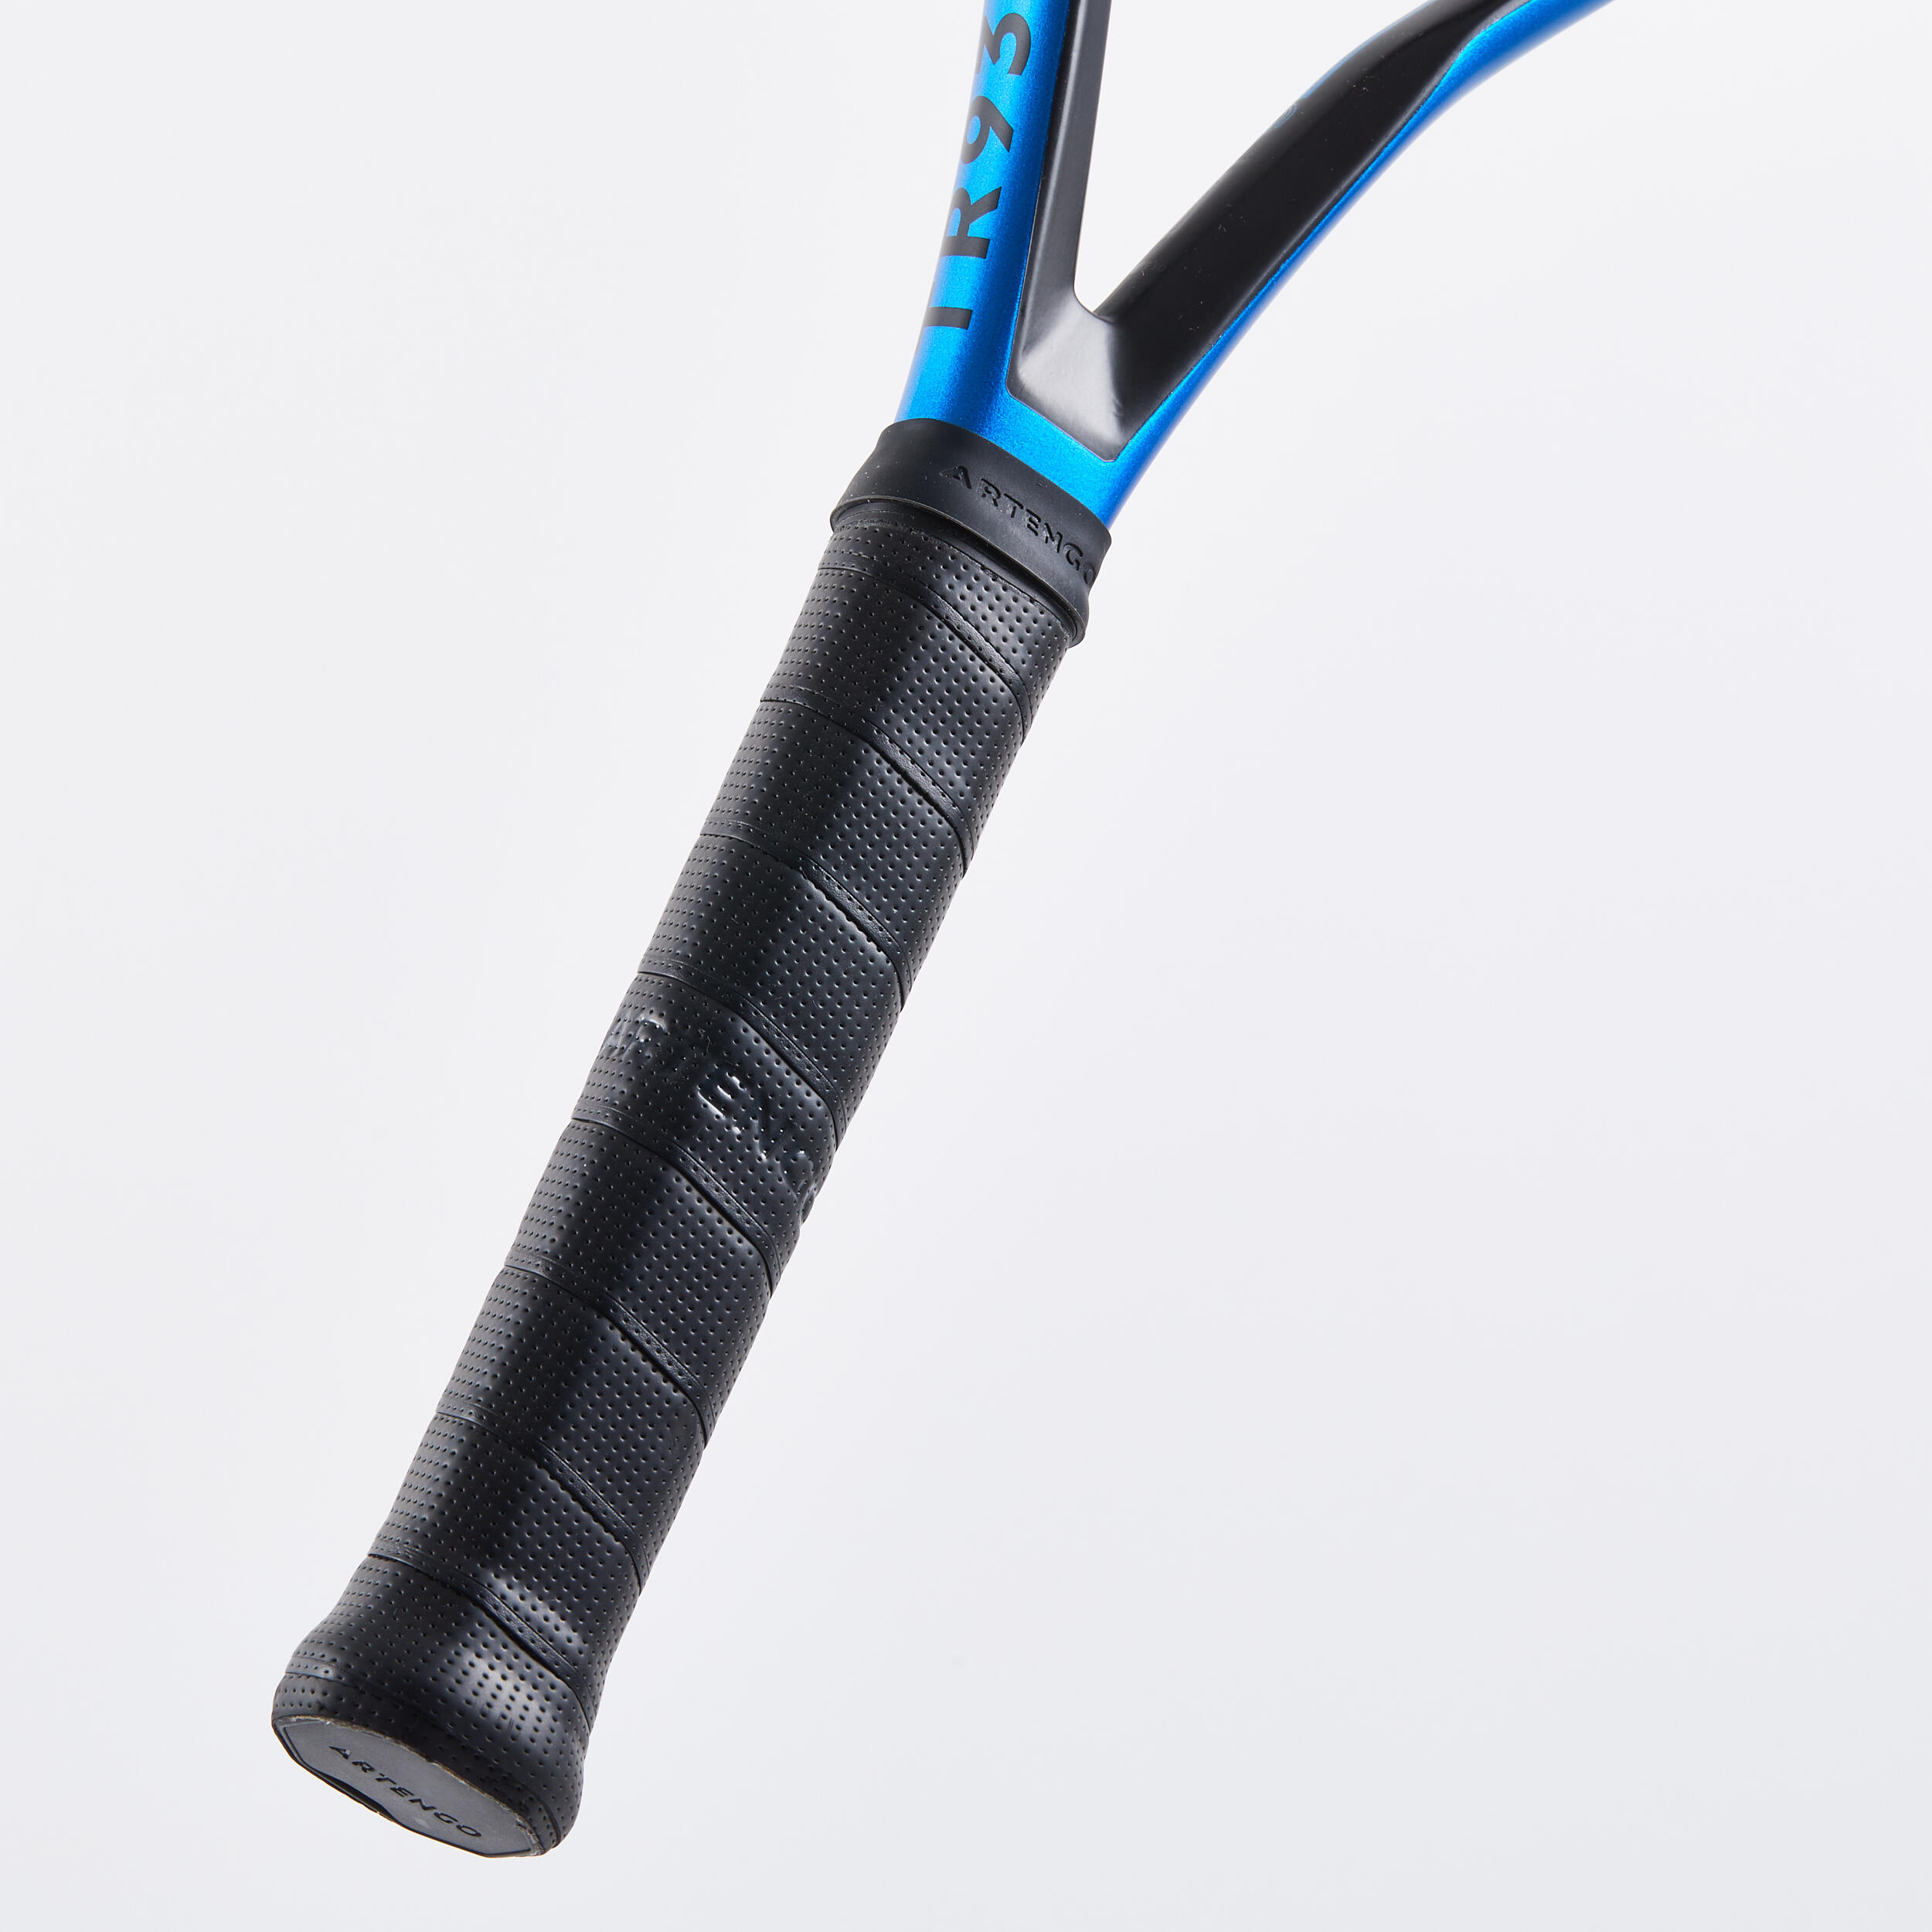 Tennis Racket 300 g - TR 930 Spin Pro Black/Blue - ARTENGO